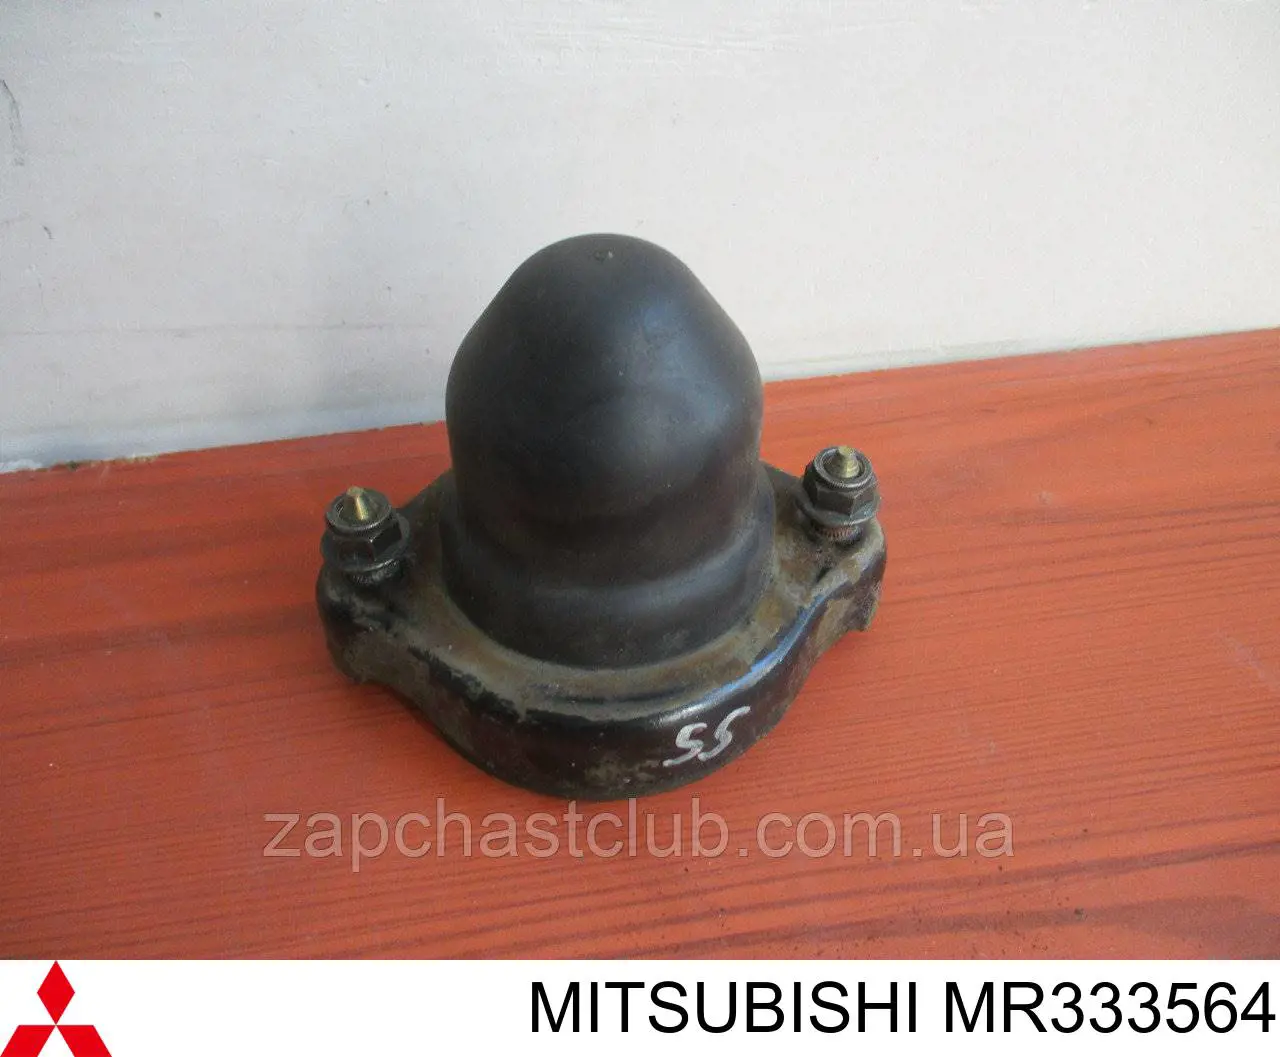 MR333564 Mitsubishi suporte de amortecedor traseiro